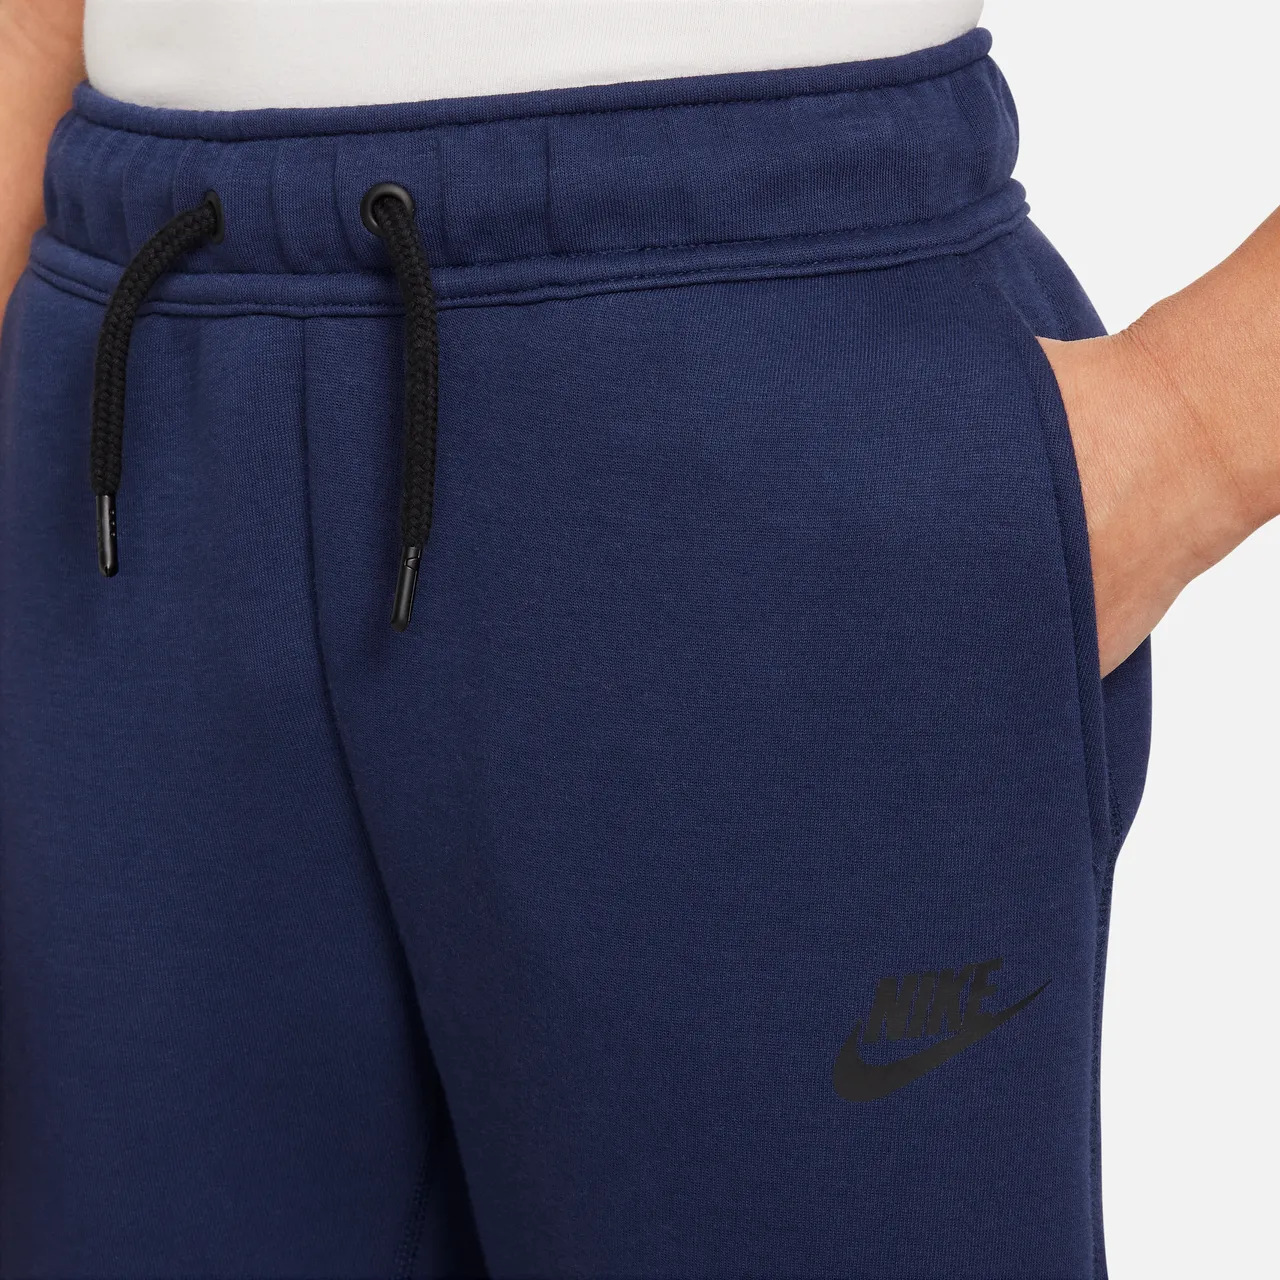 Nike Sportswear Tech Fleece Hose für ältere Kinder (Jungen) - Blau